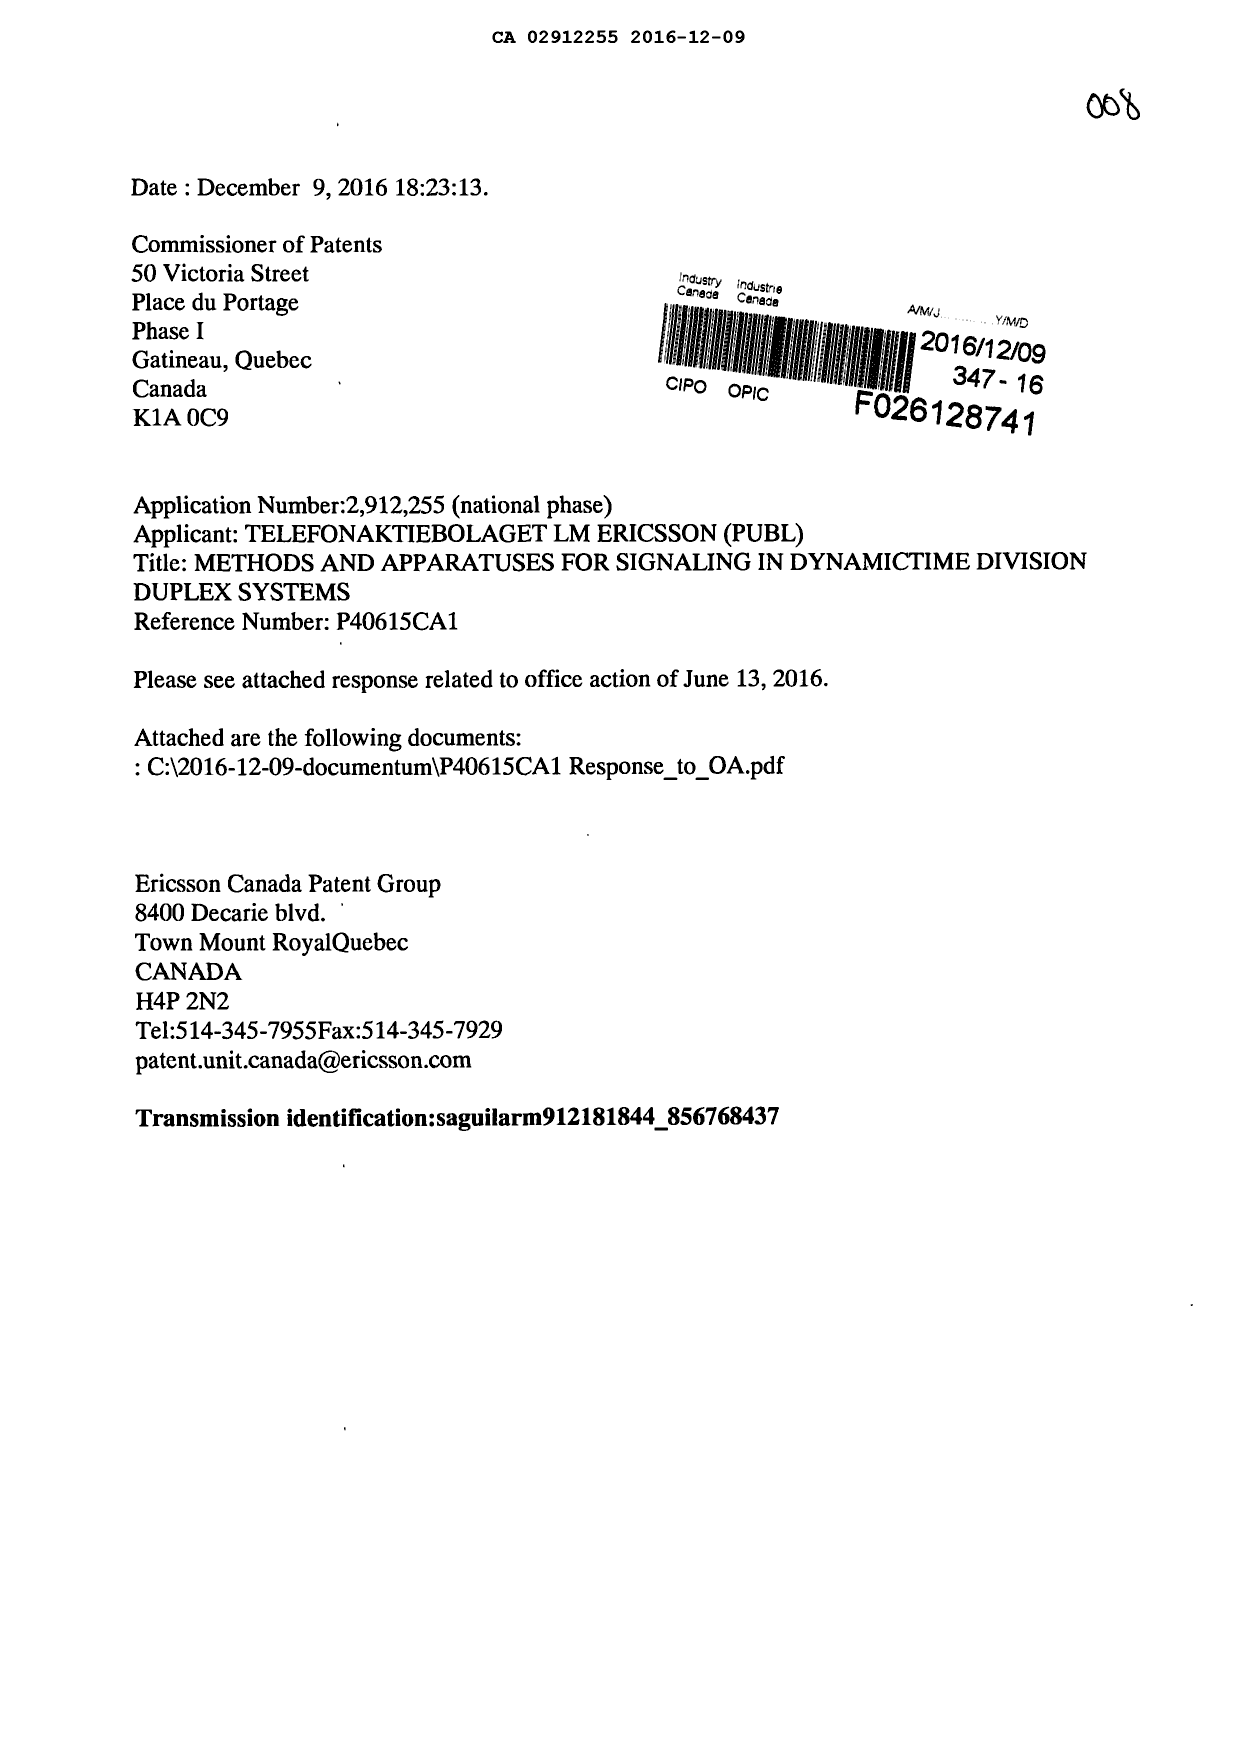 Canadian Patent Document 2912255. Amendment 20161209. Image 1 of 11